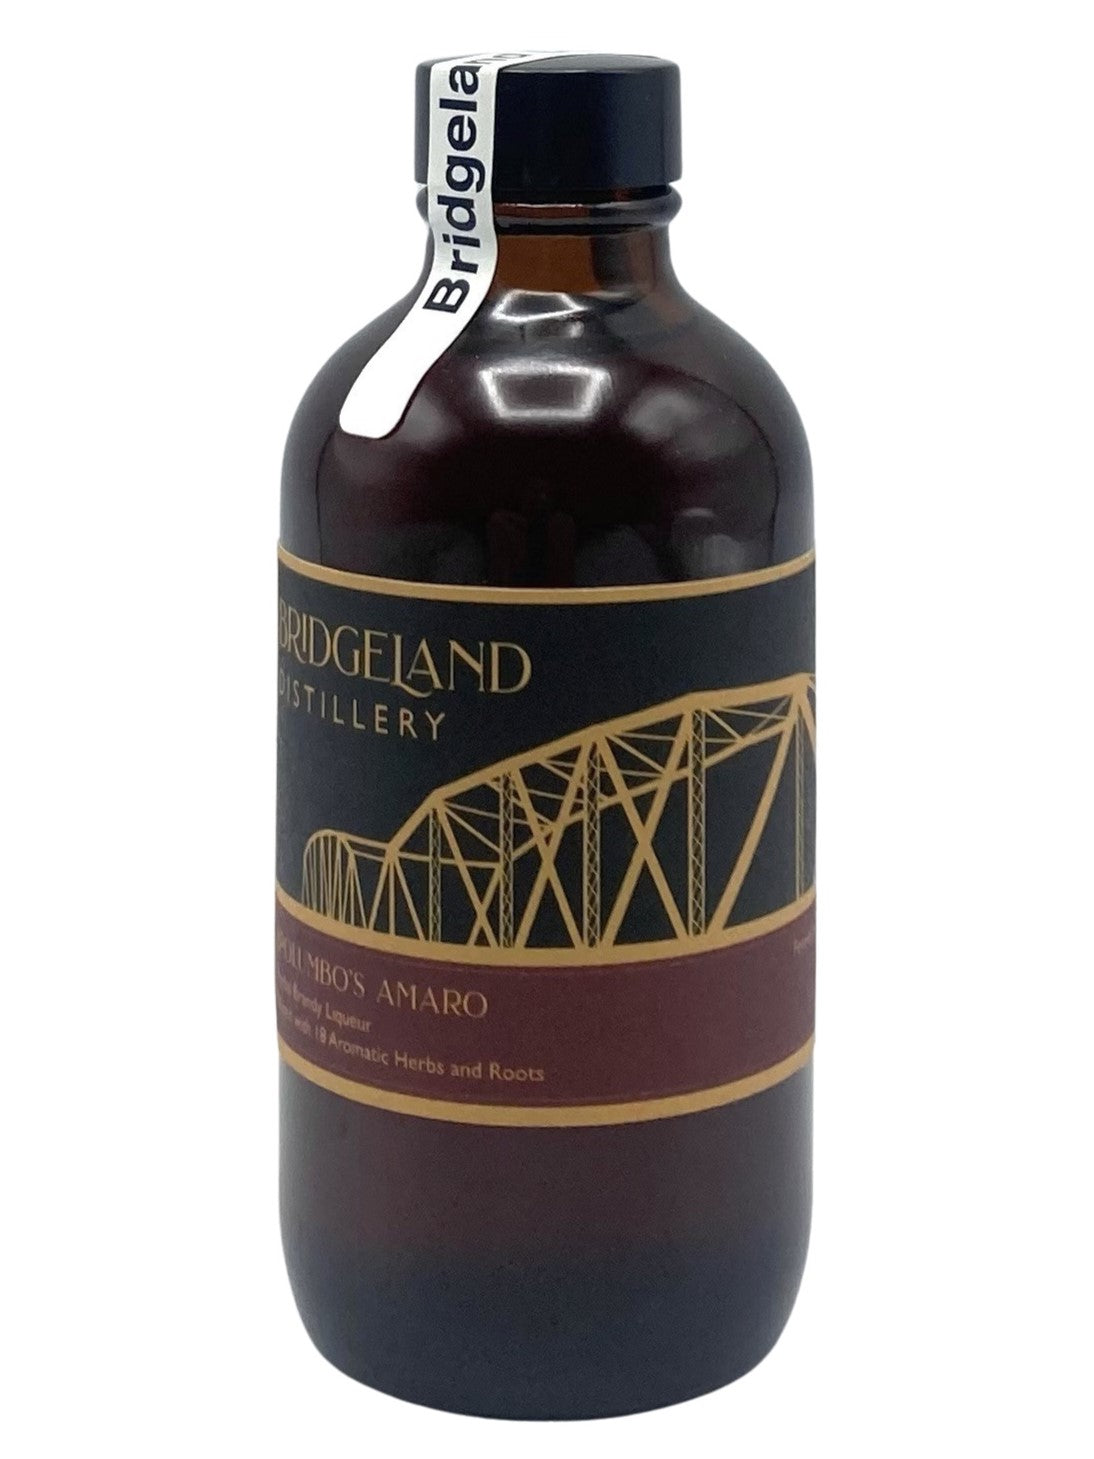 Bridgeland Distillery Spolumbo's Amaro 120 ml